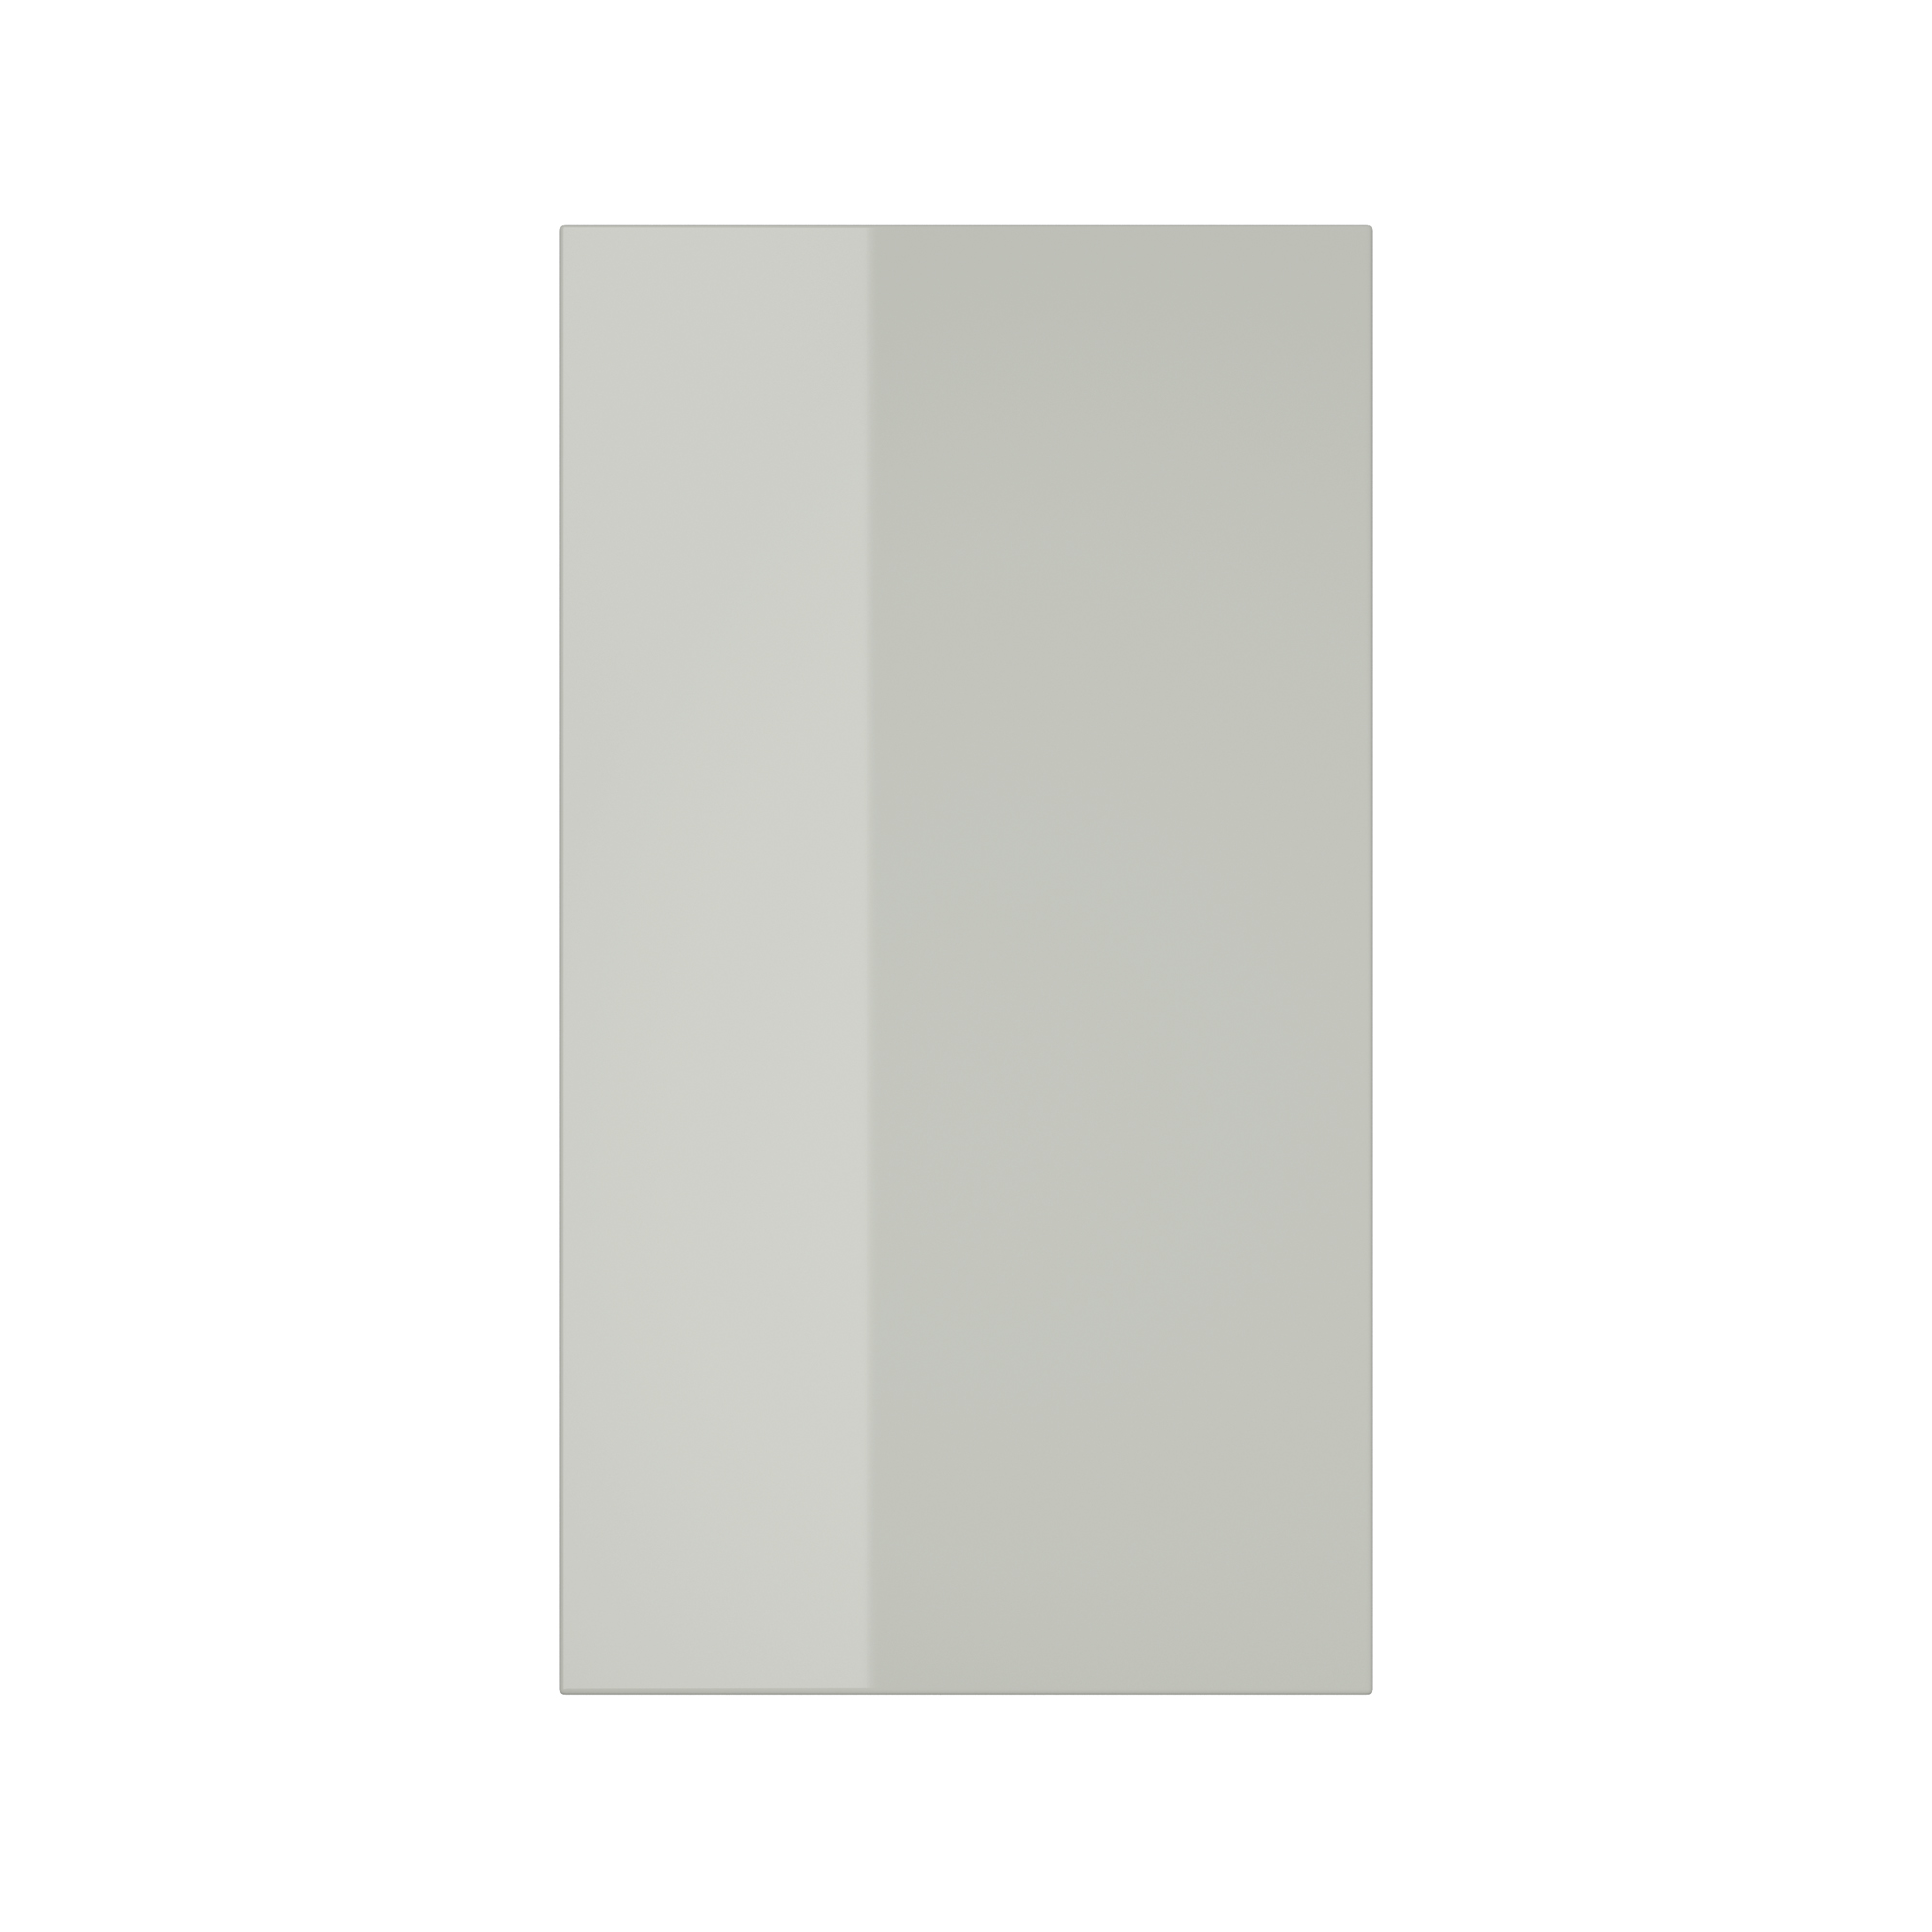 895 x 597 Zola Gloss Light Grey